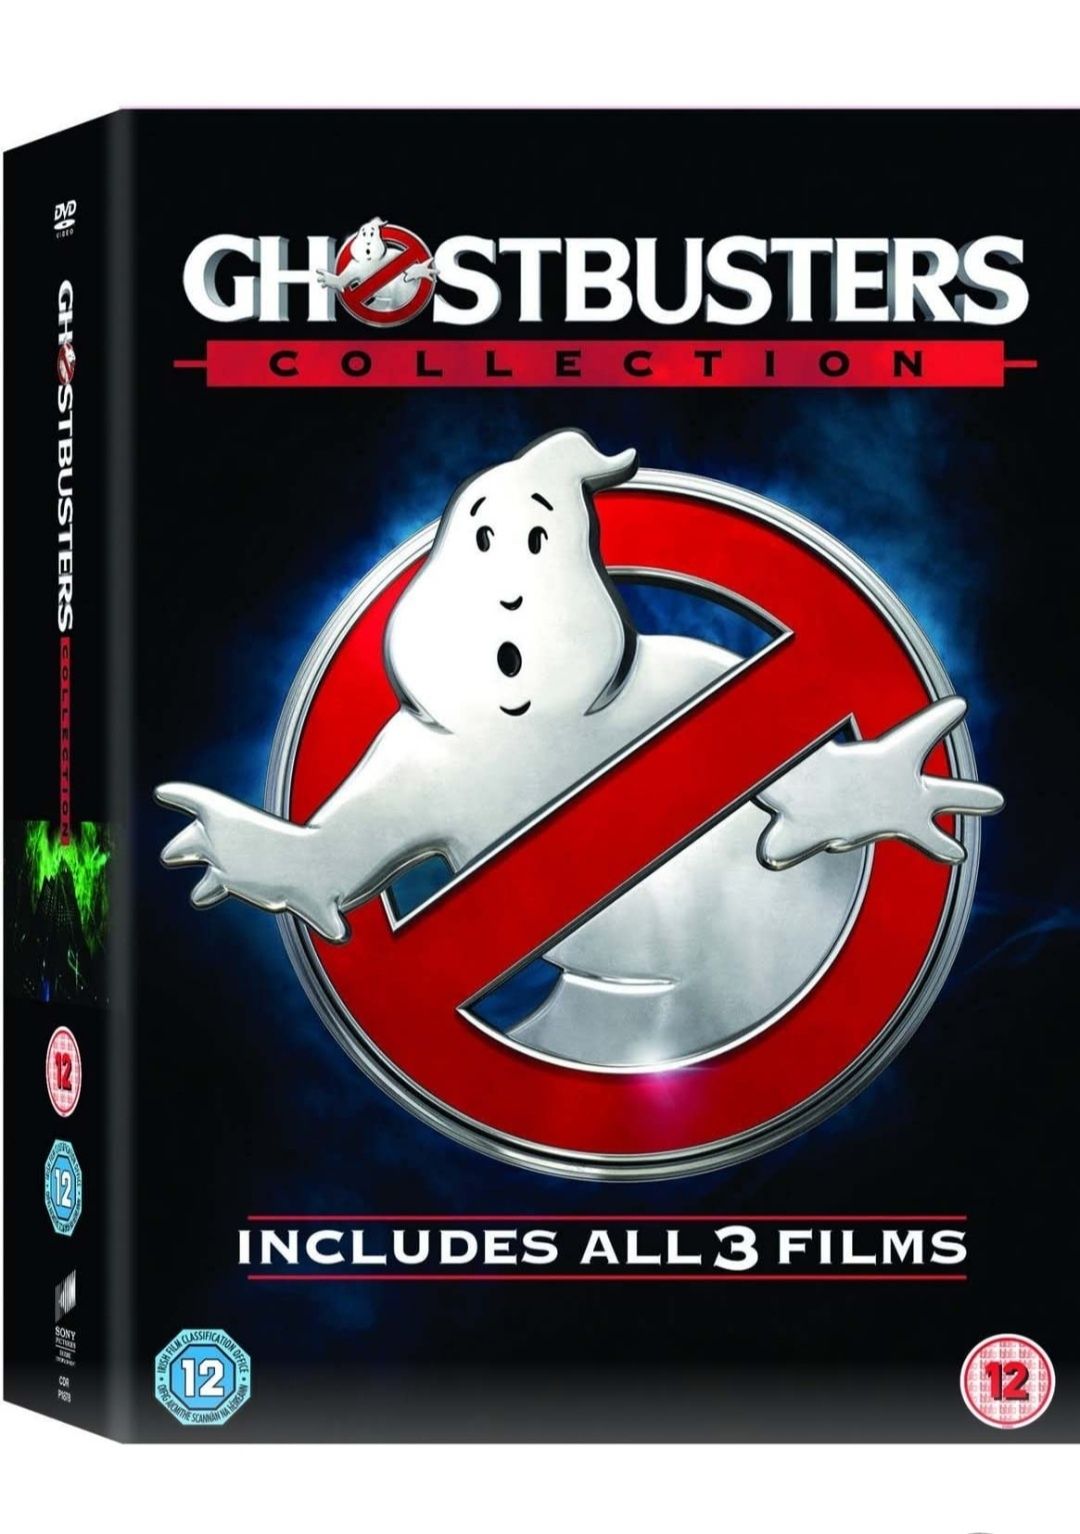 Filme Ghostbusters - 1-4 Collection [DVD]
Originale